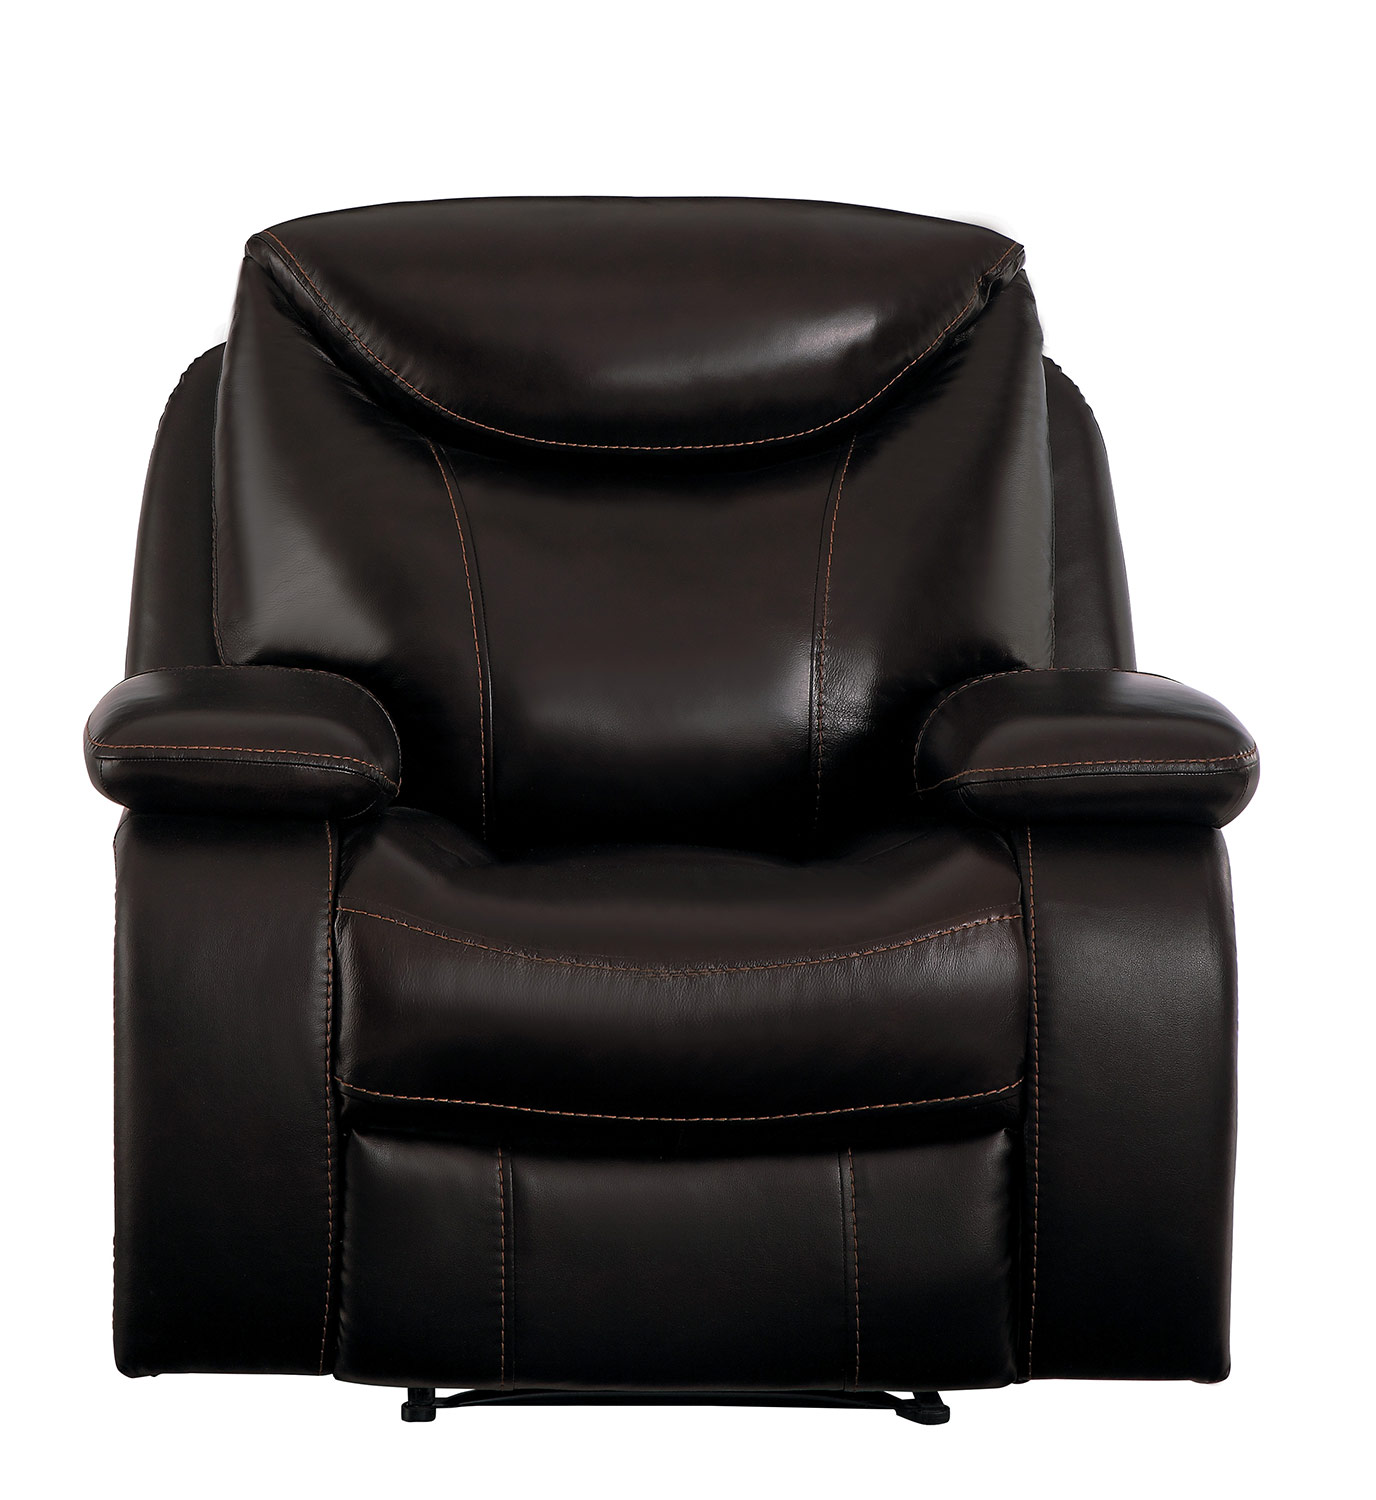 Homelegance Verkin Reclining Chair - Dark Brown